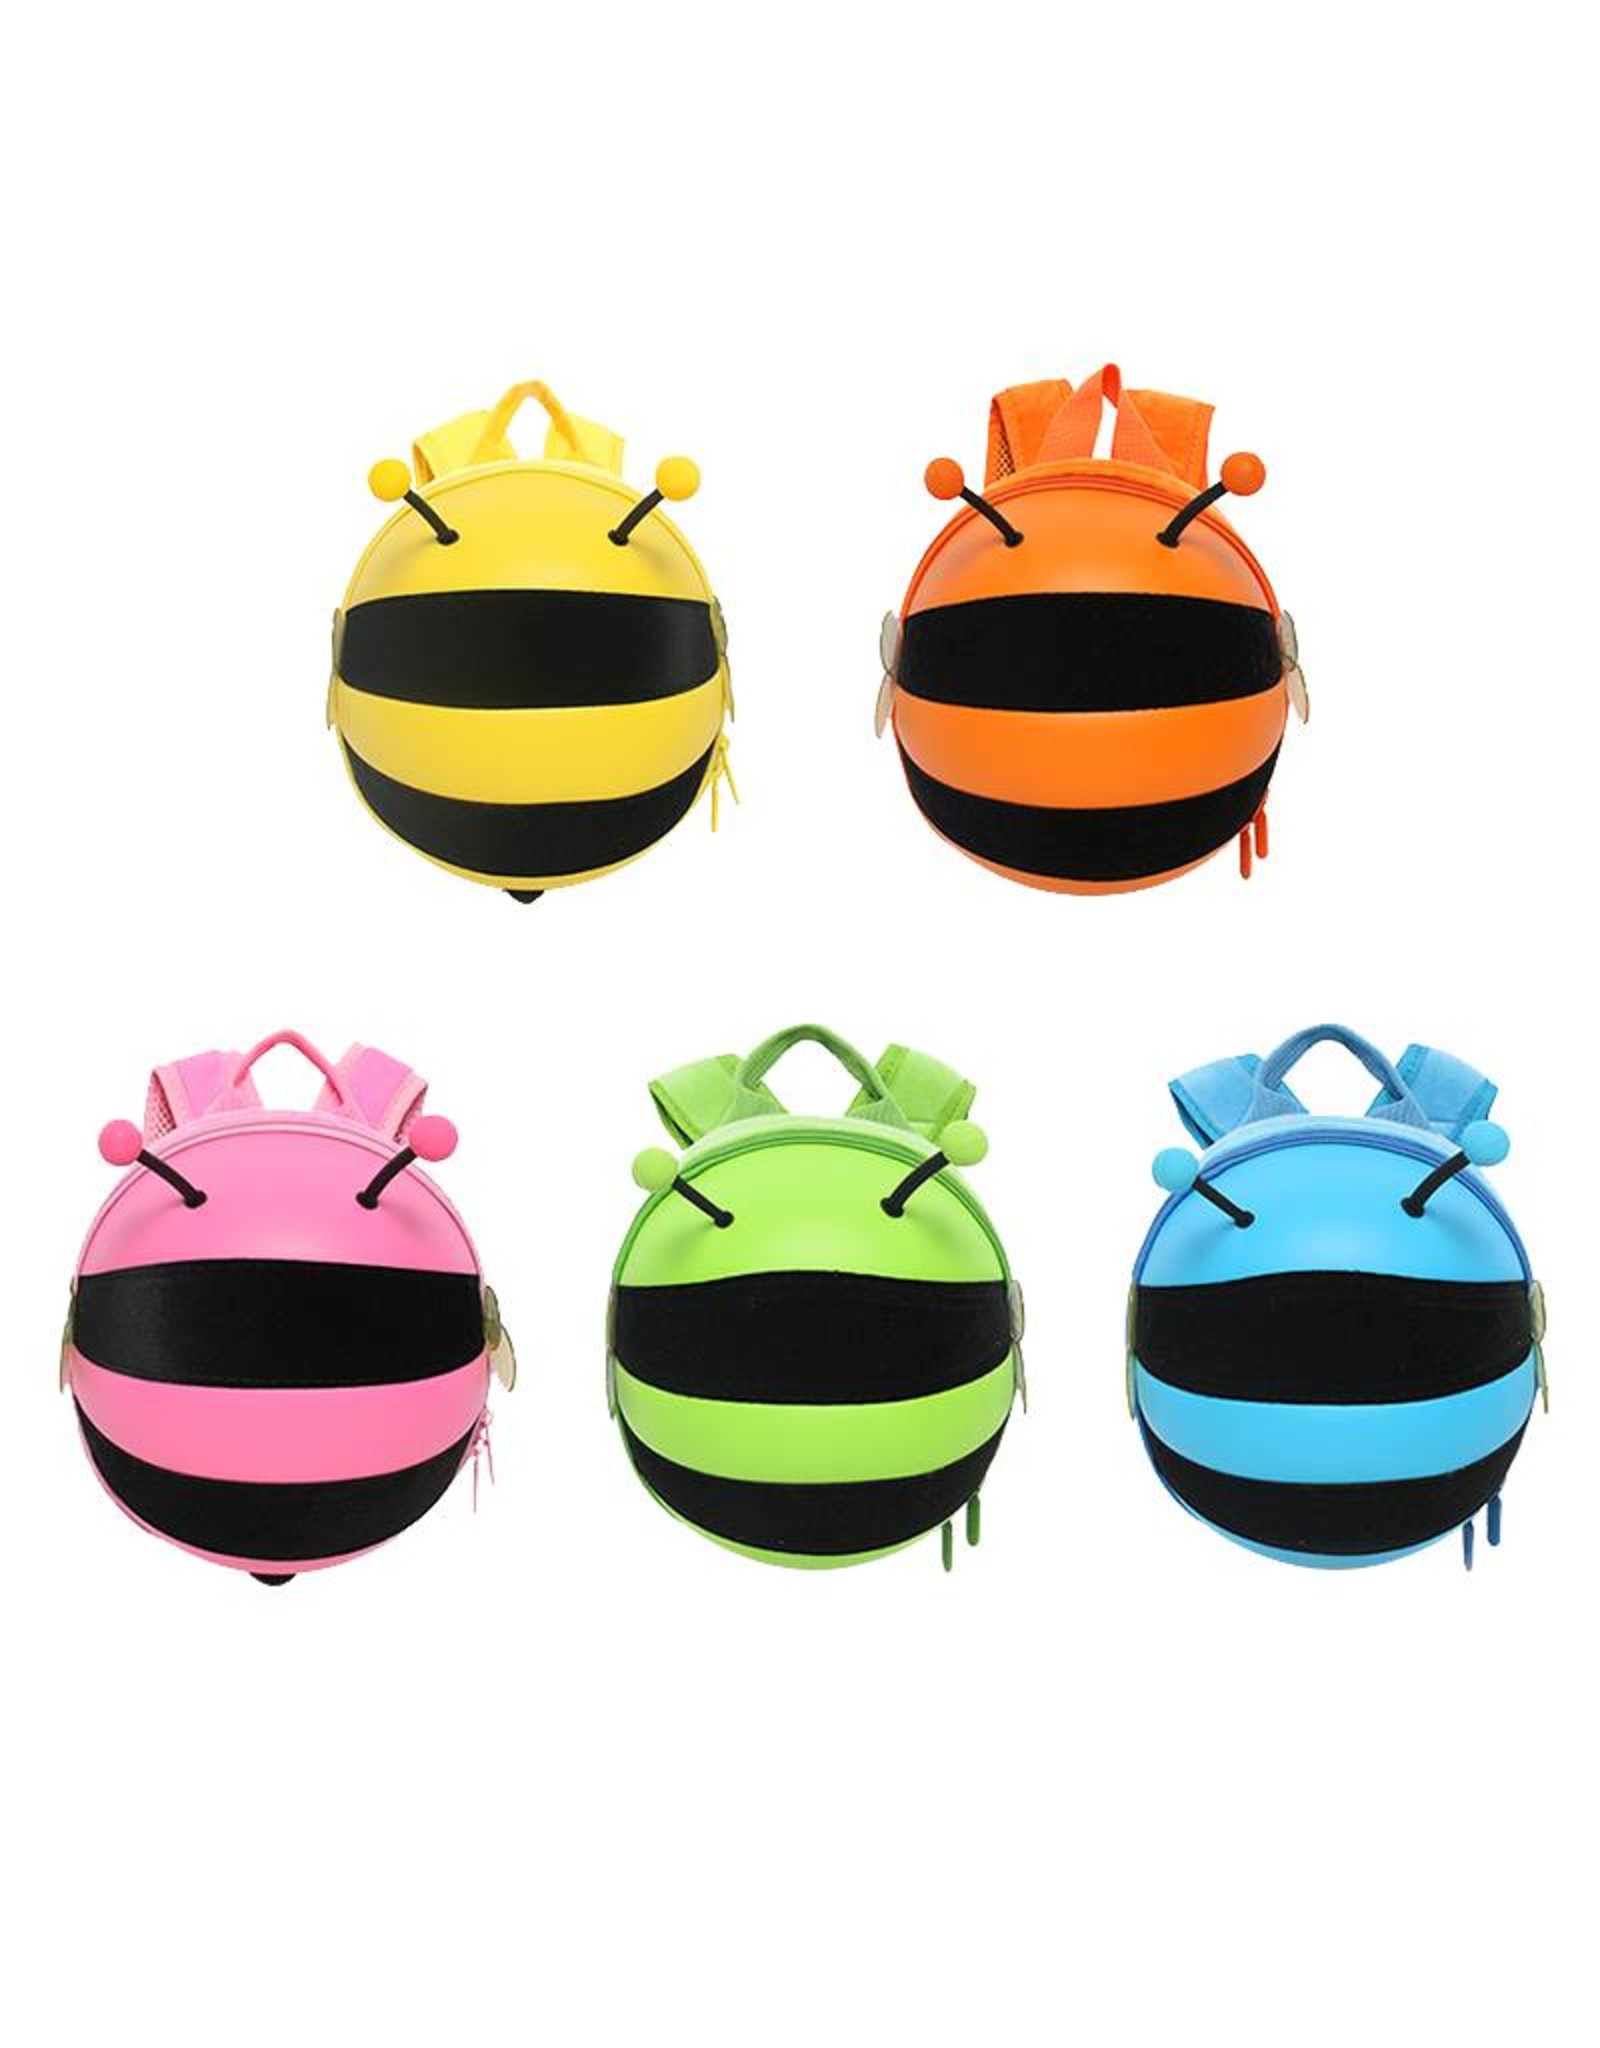 Toddler Backpack Bee (Orange Safety Harness)